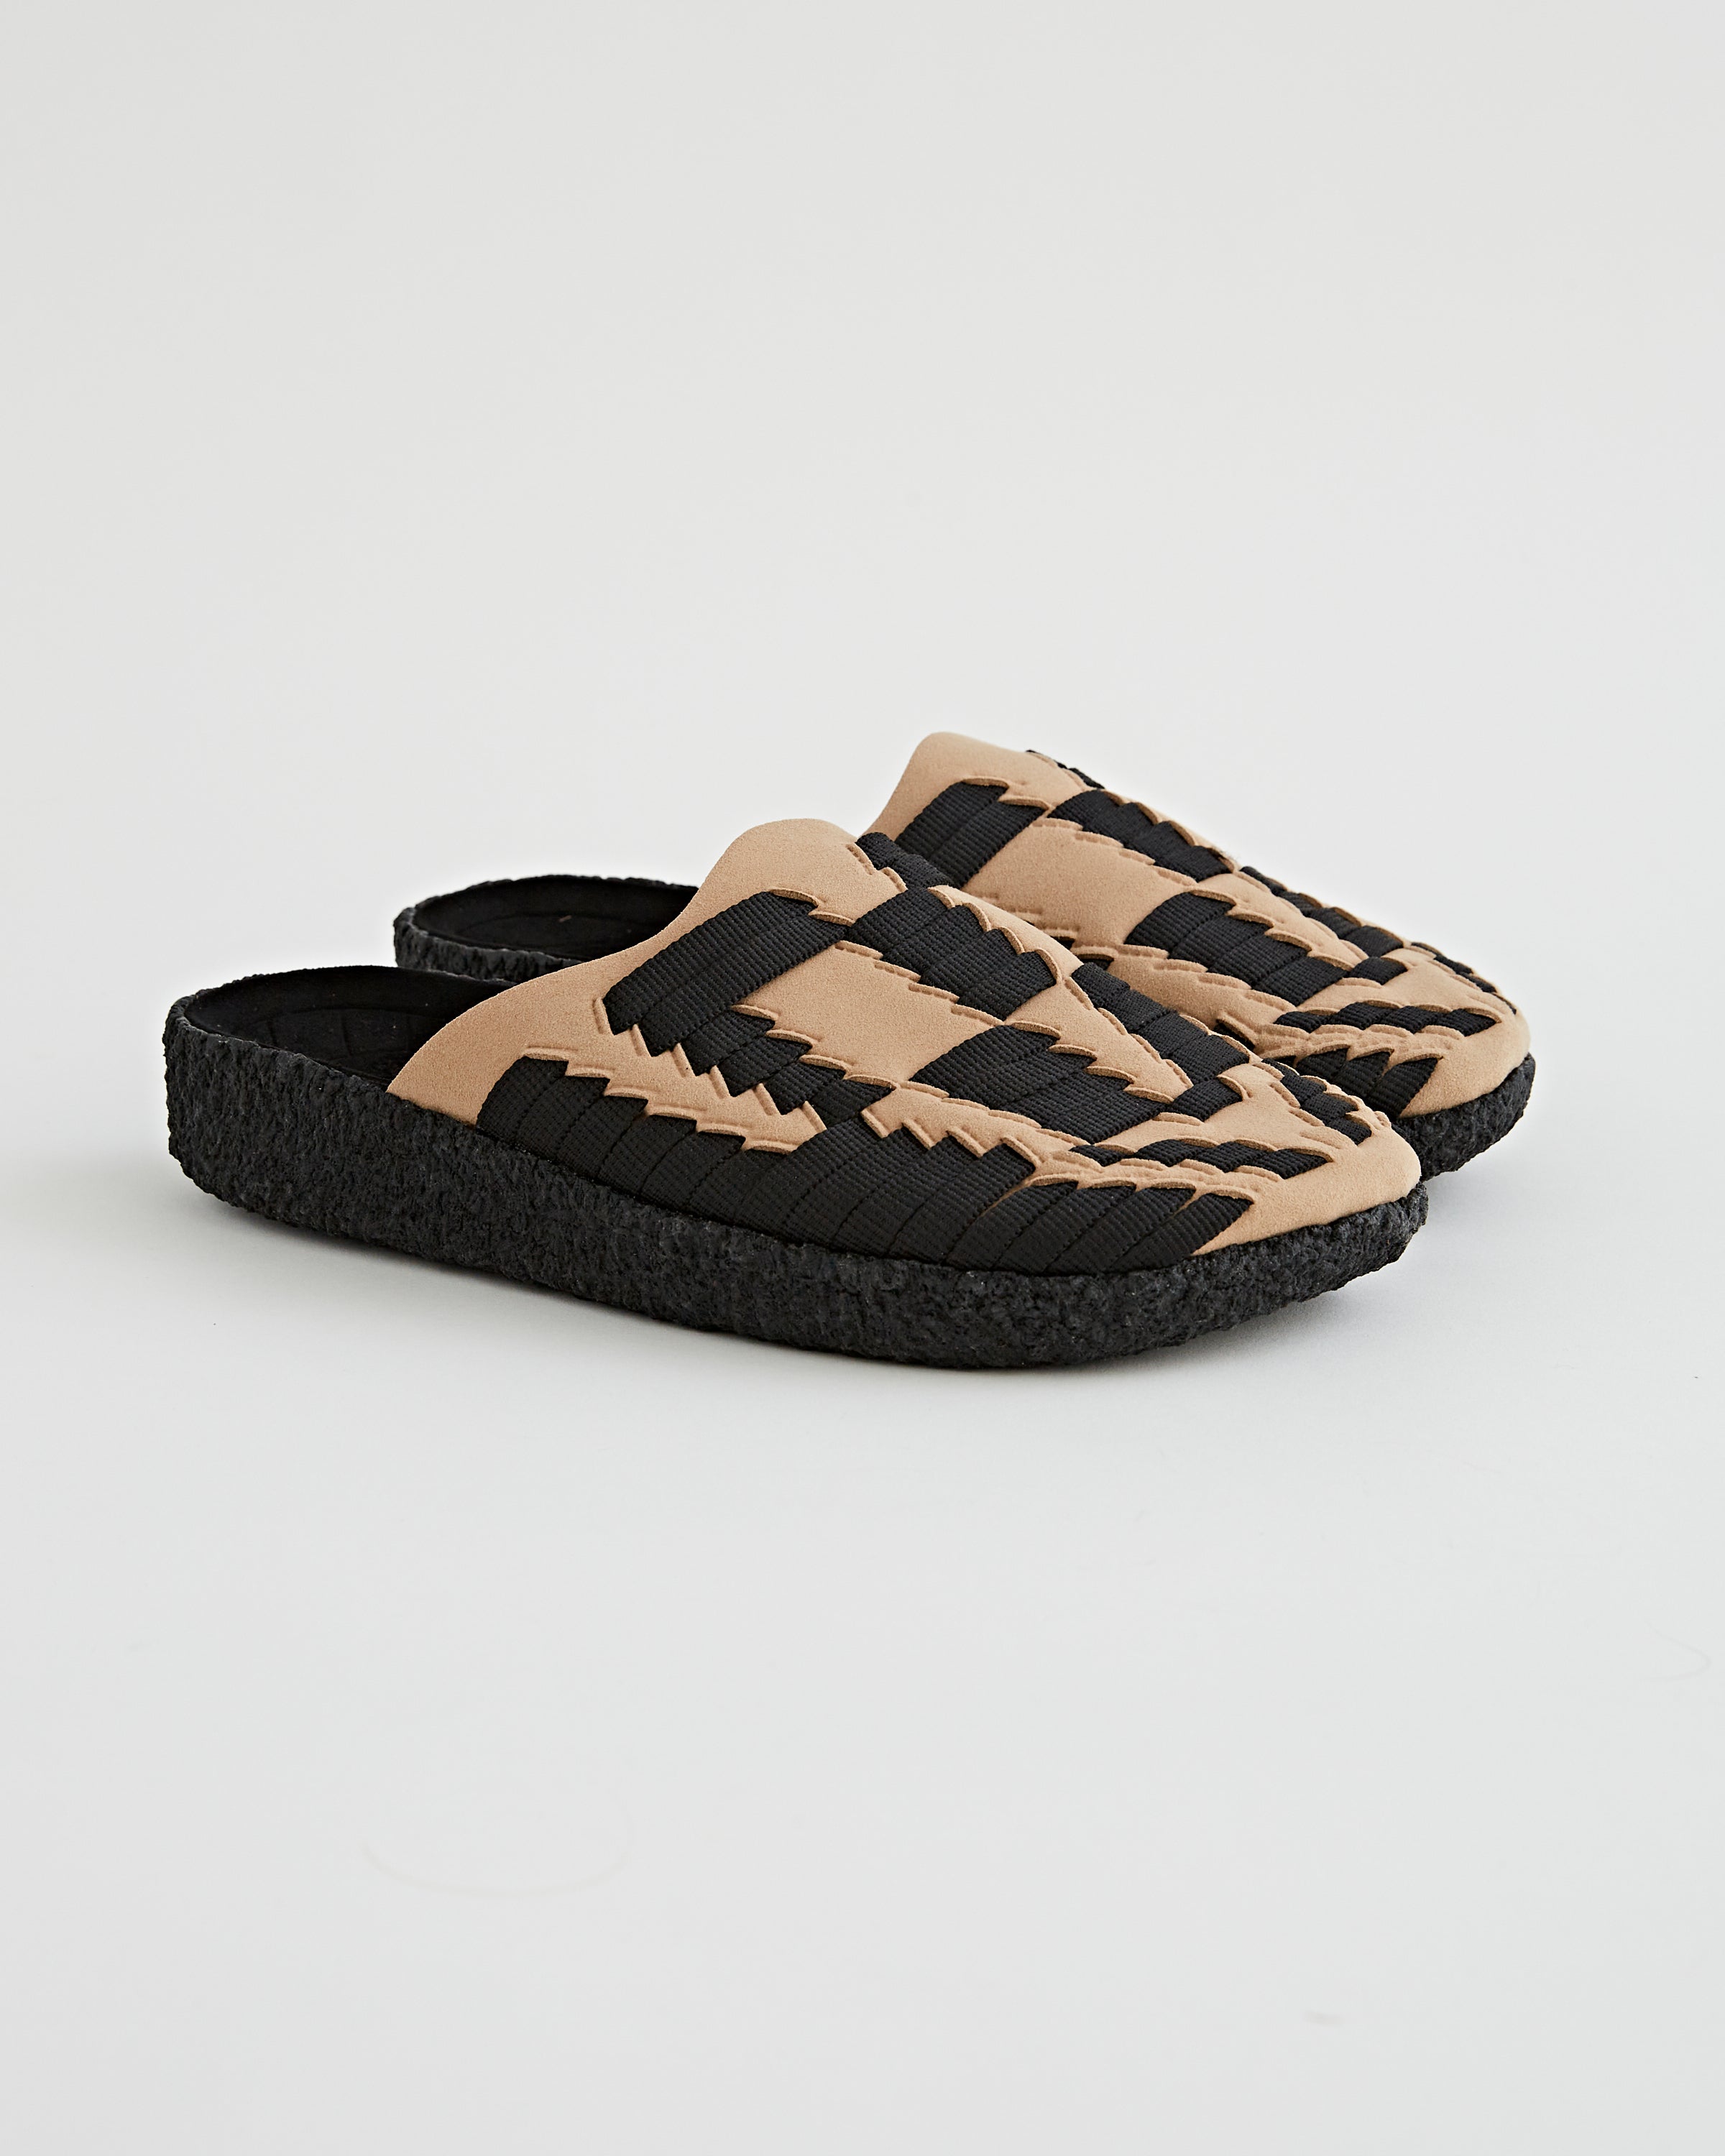 Malibu Sandals Thunderbird Classic Black Beige Shoes Leather Men